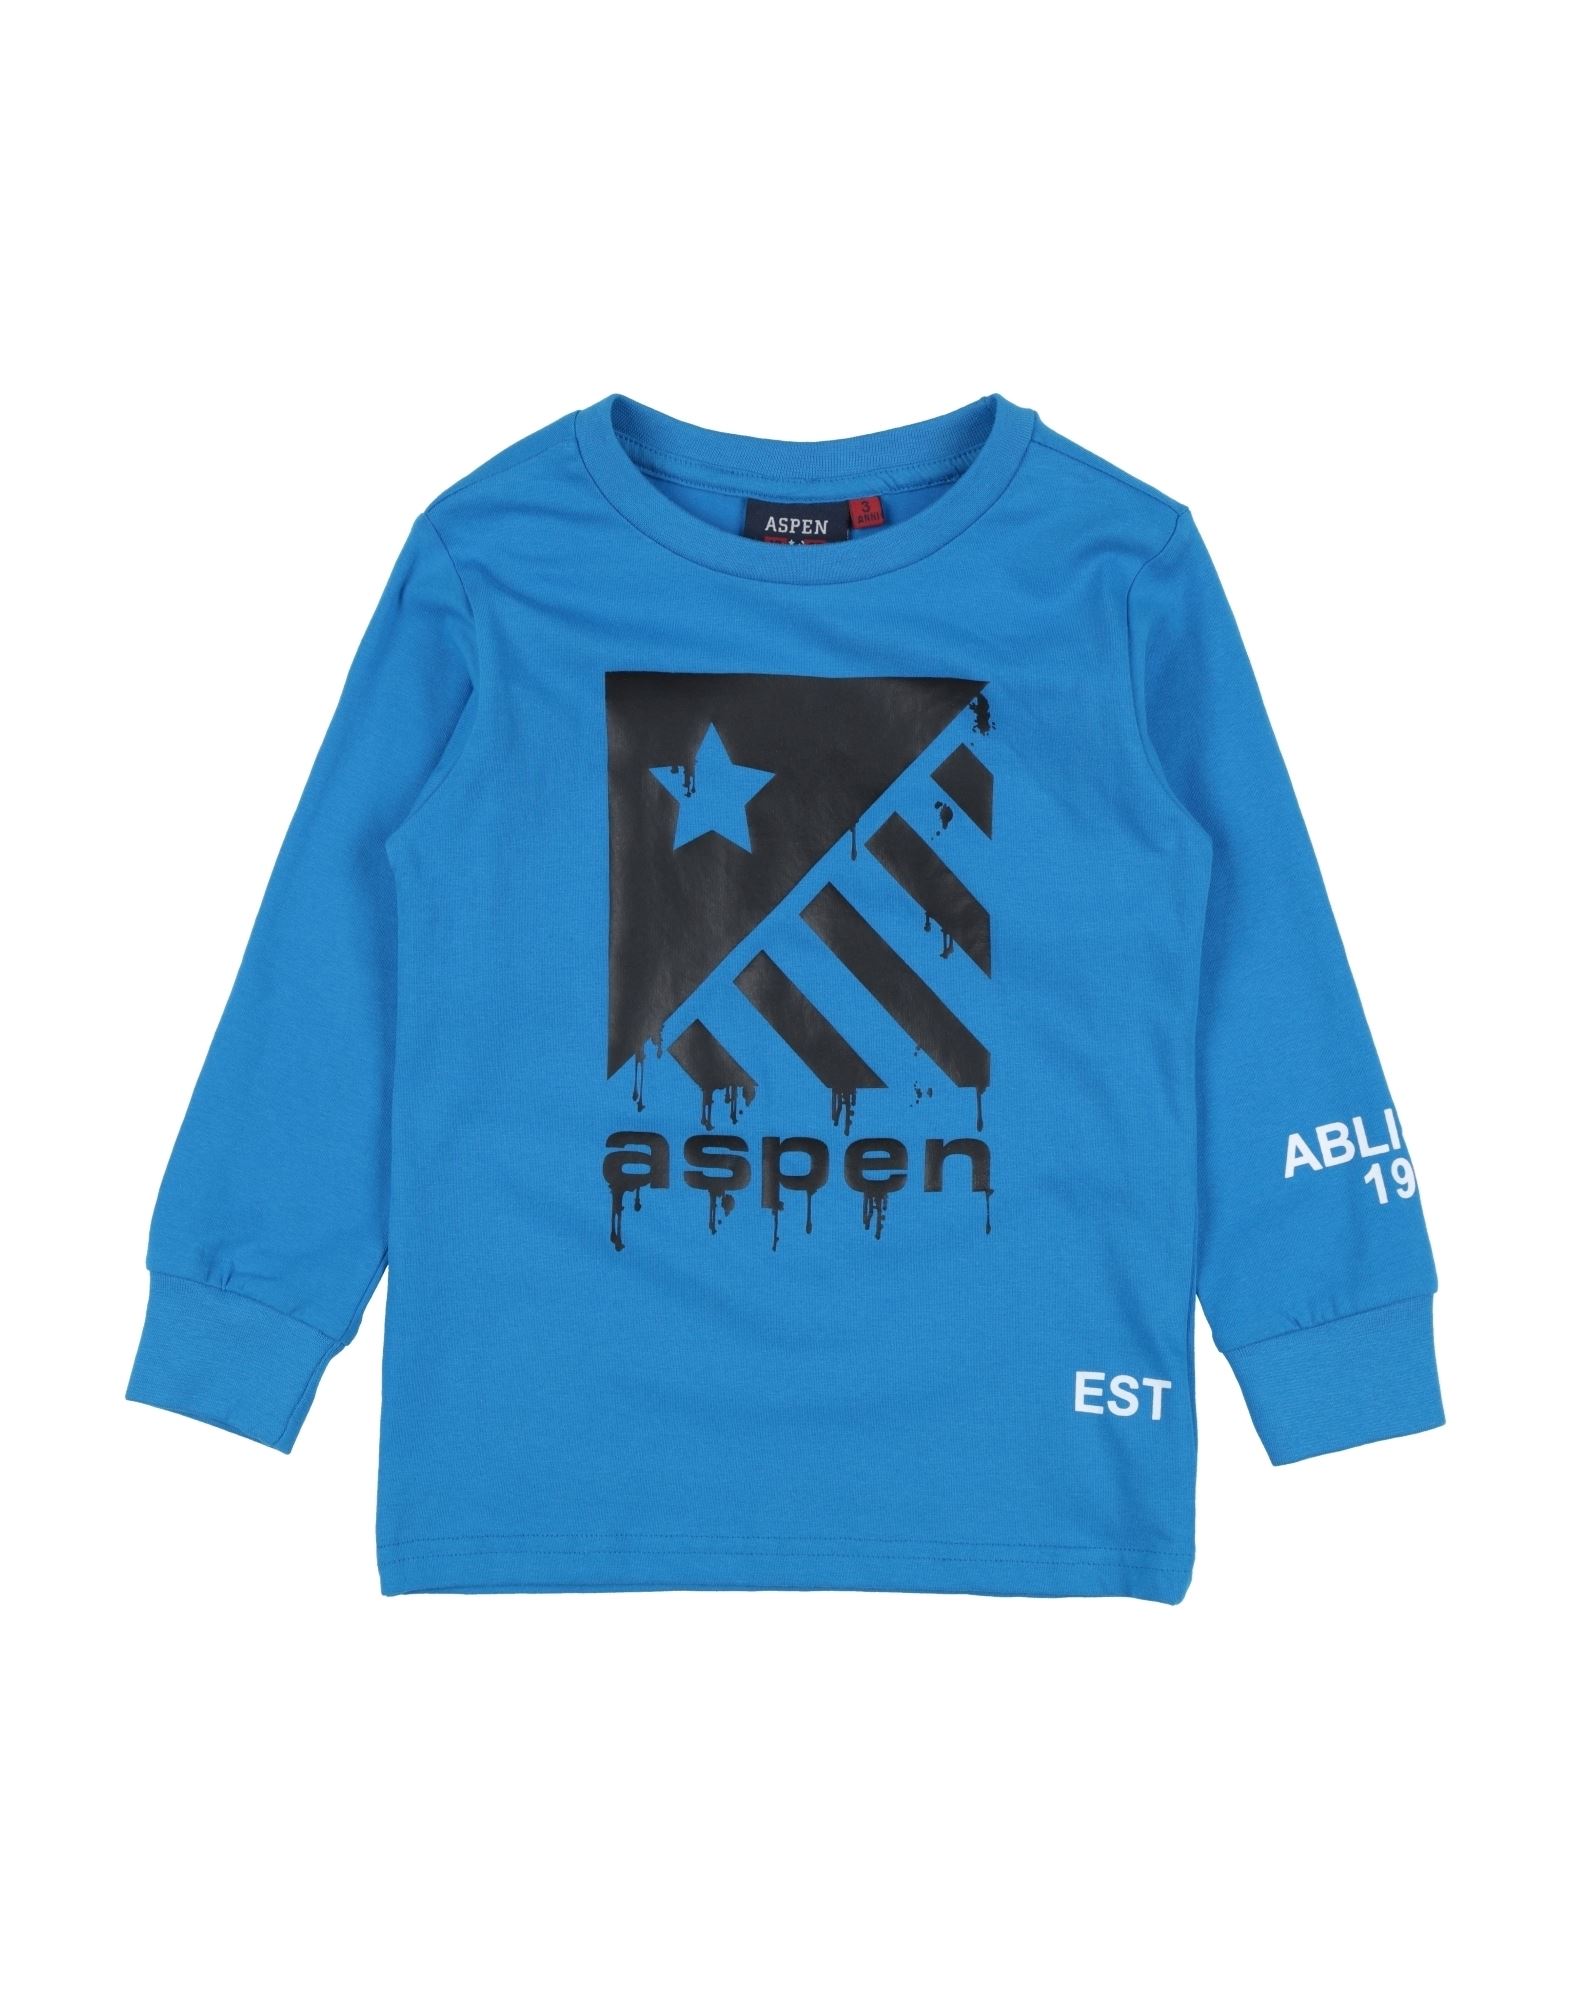 Aspen Polo Club Kids'  T-shirts In Blue